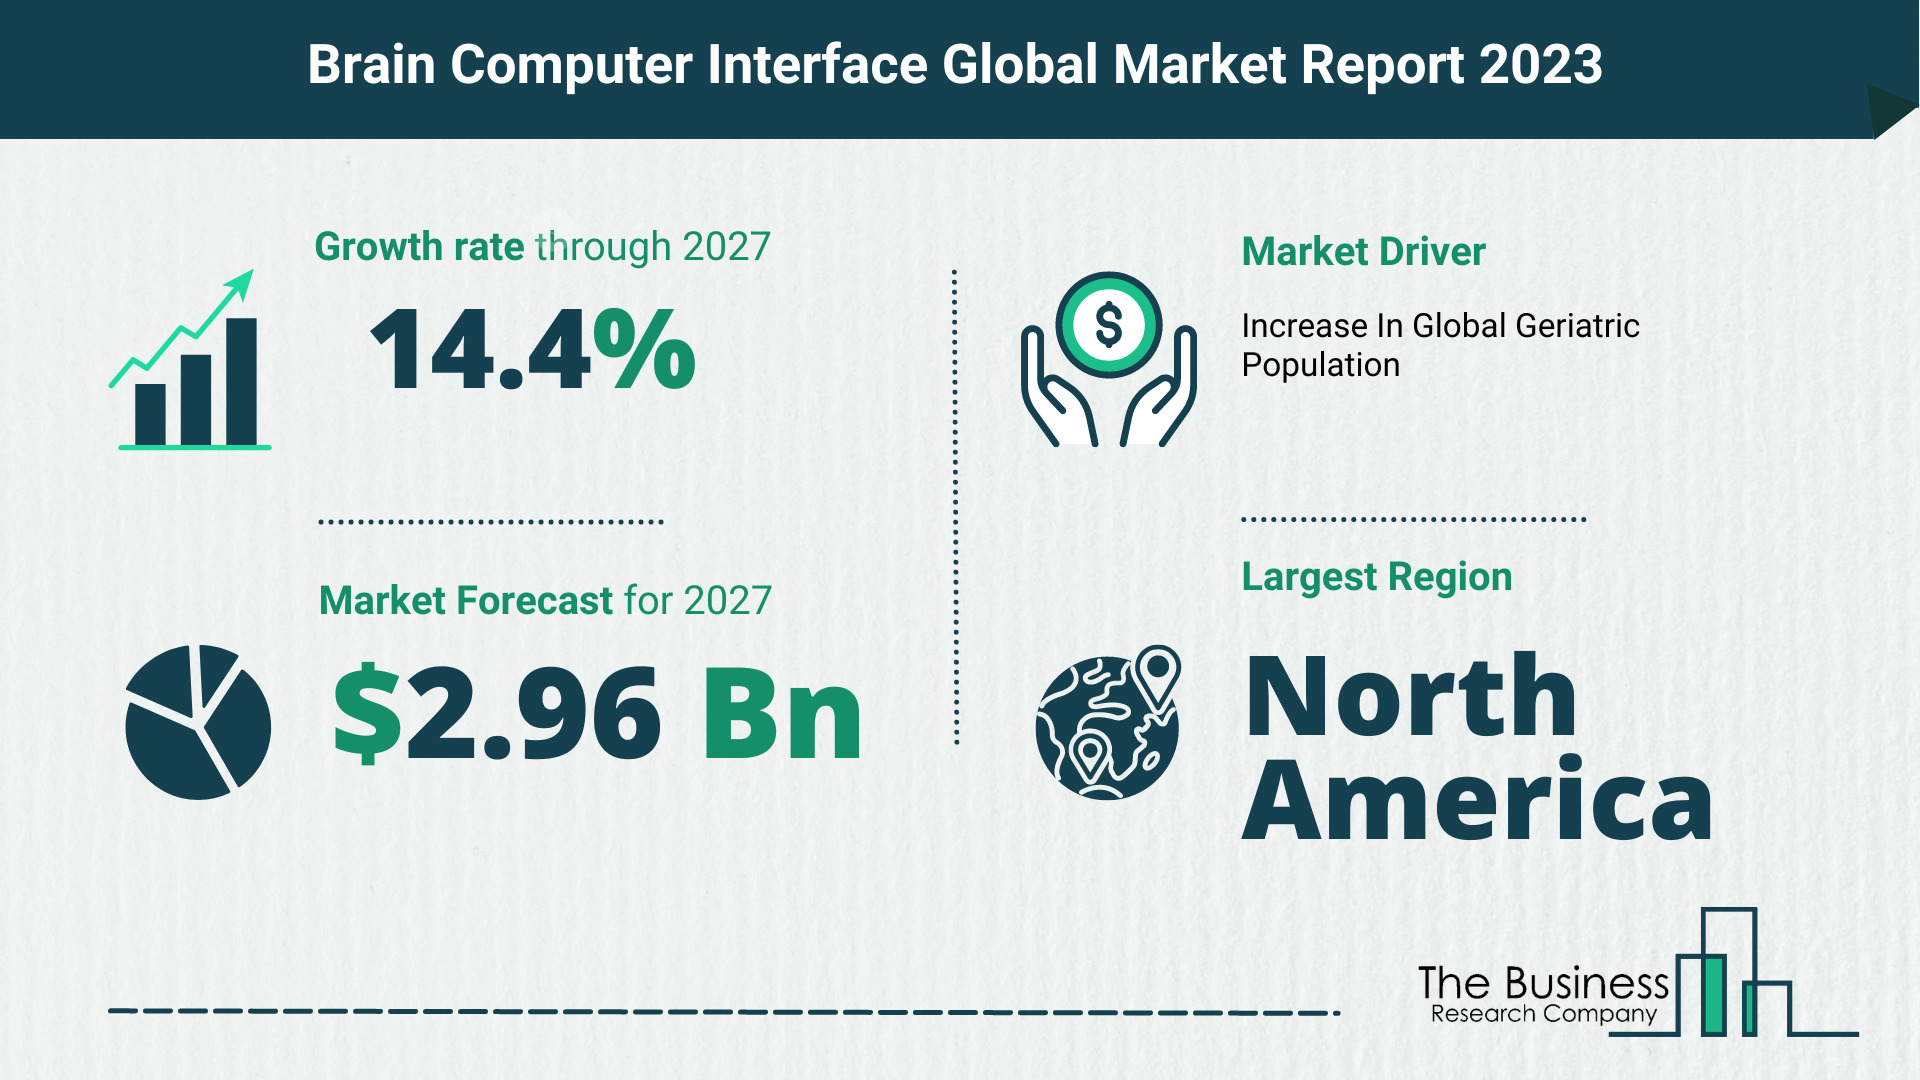 Global Brain Computer Interface Market